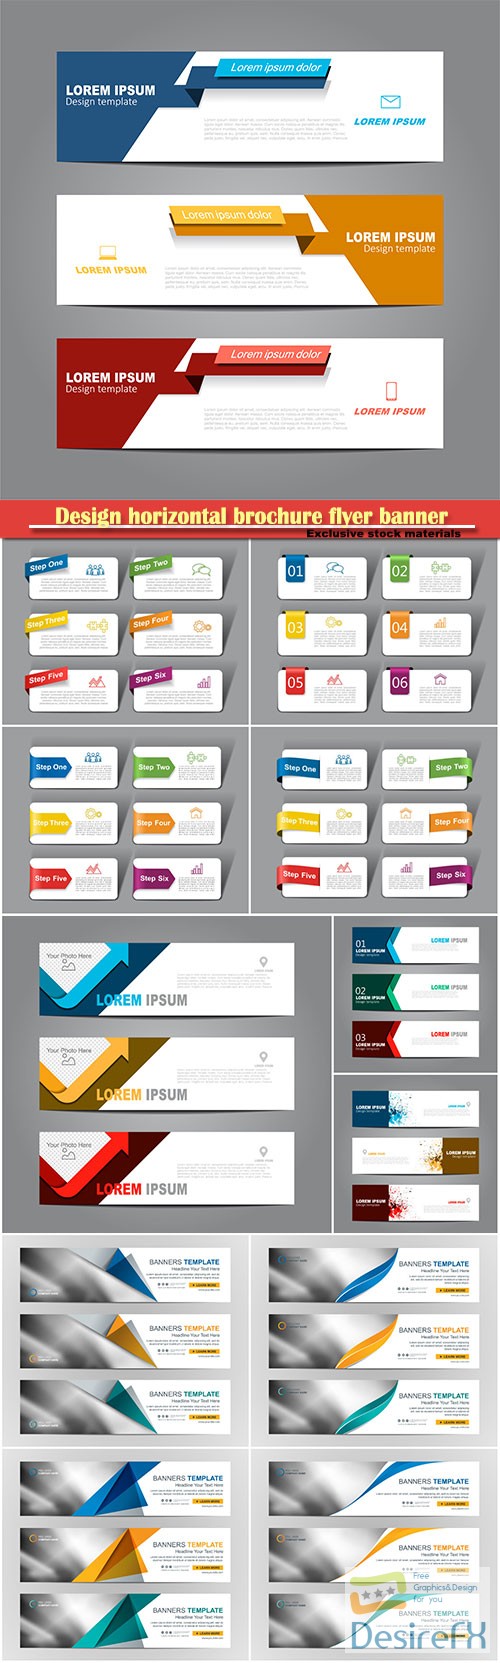 Design horizontal brochure flyer banner, vector infographic template